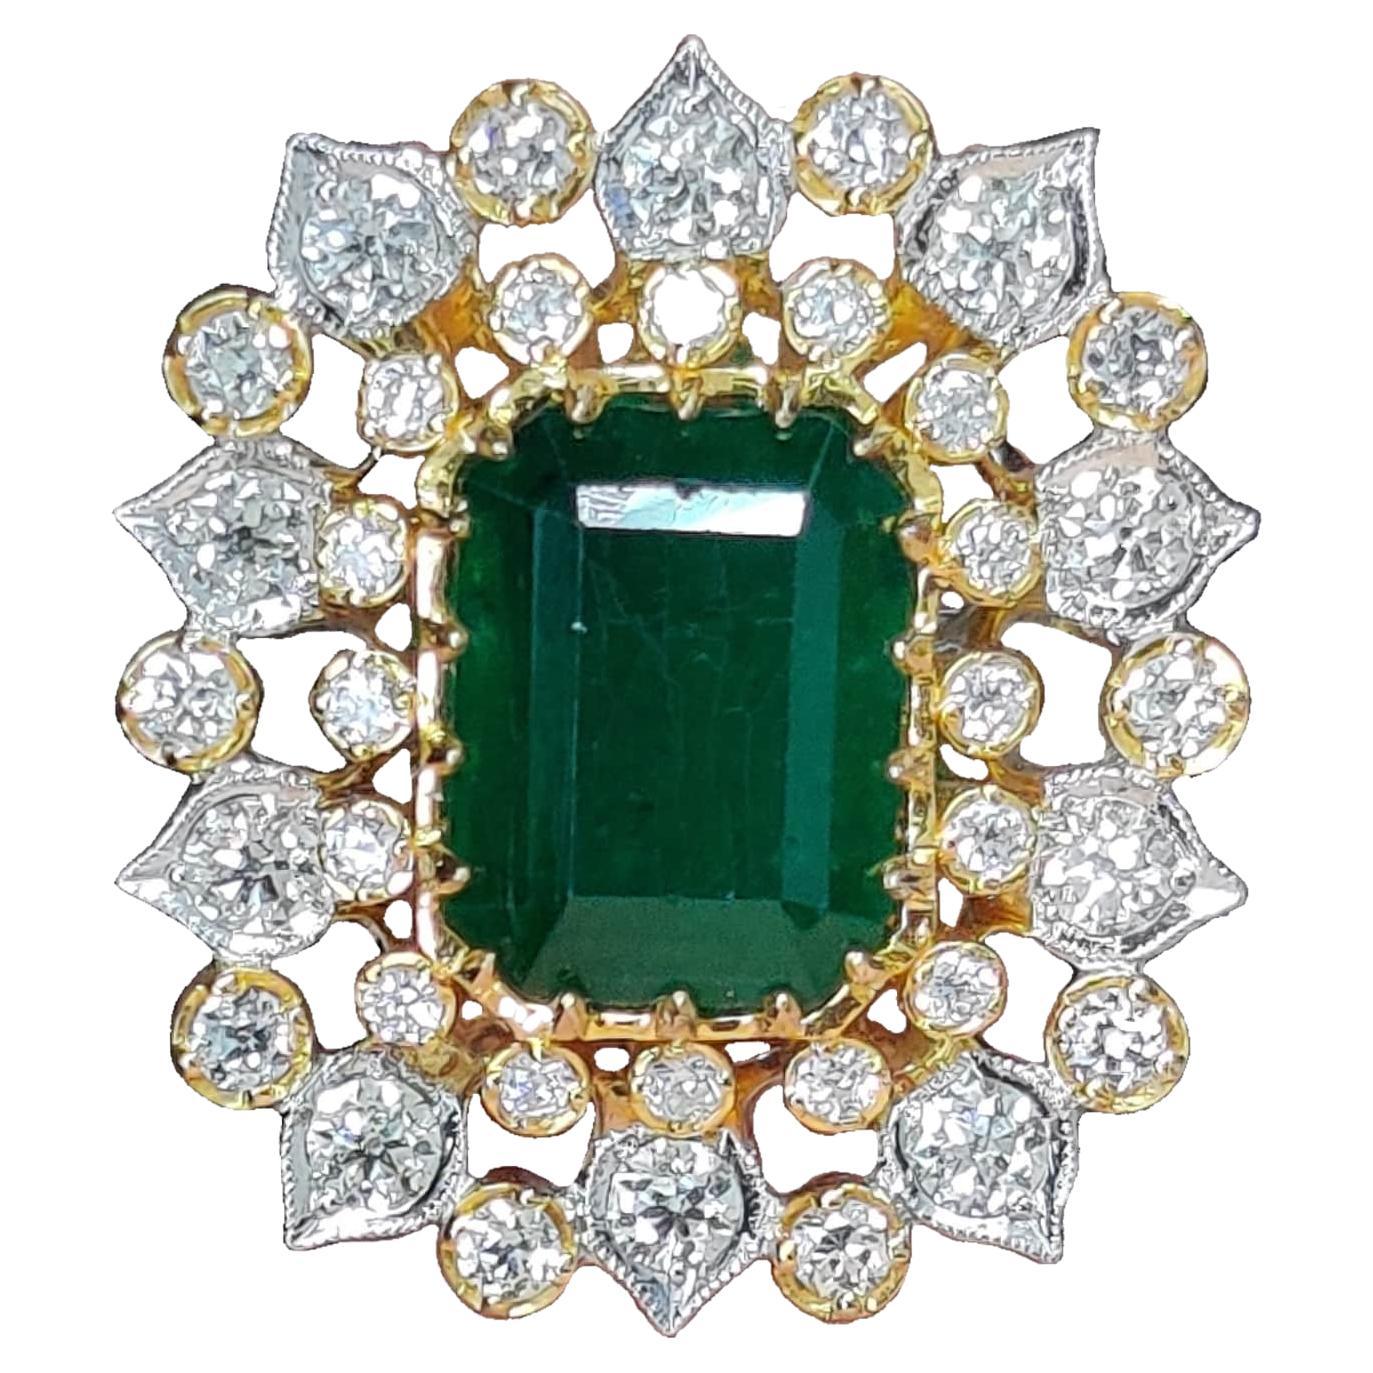 6.07 Ct Zambian Emerald, 1.51 Ct Old Mine Cut Diamonds, 18K Gold Statement Ring